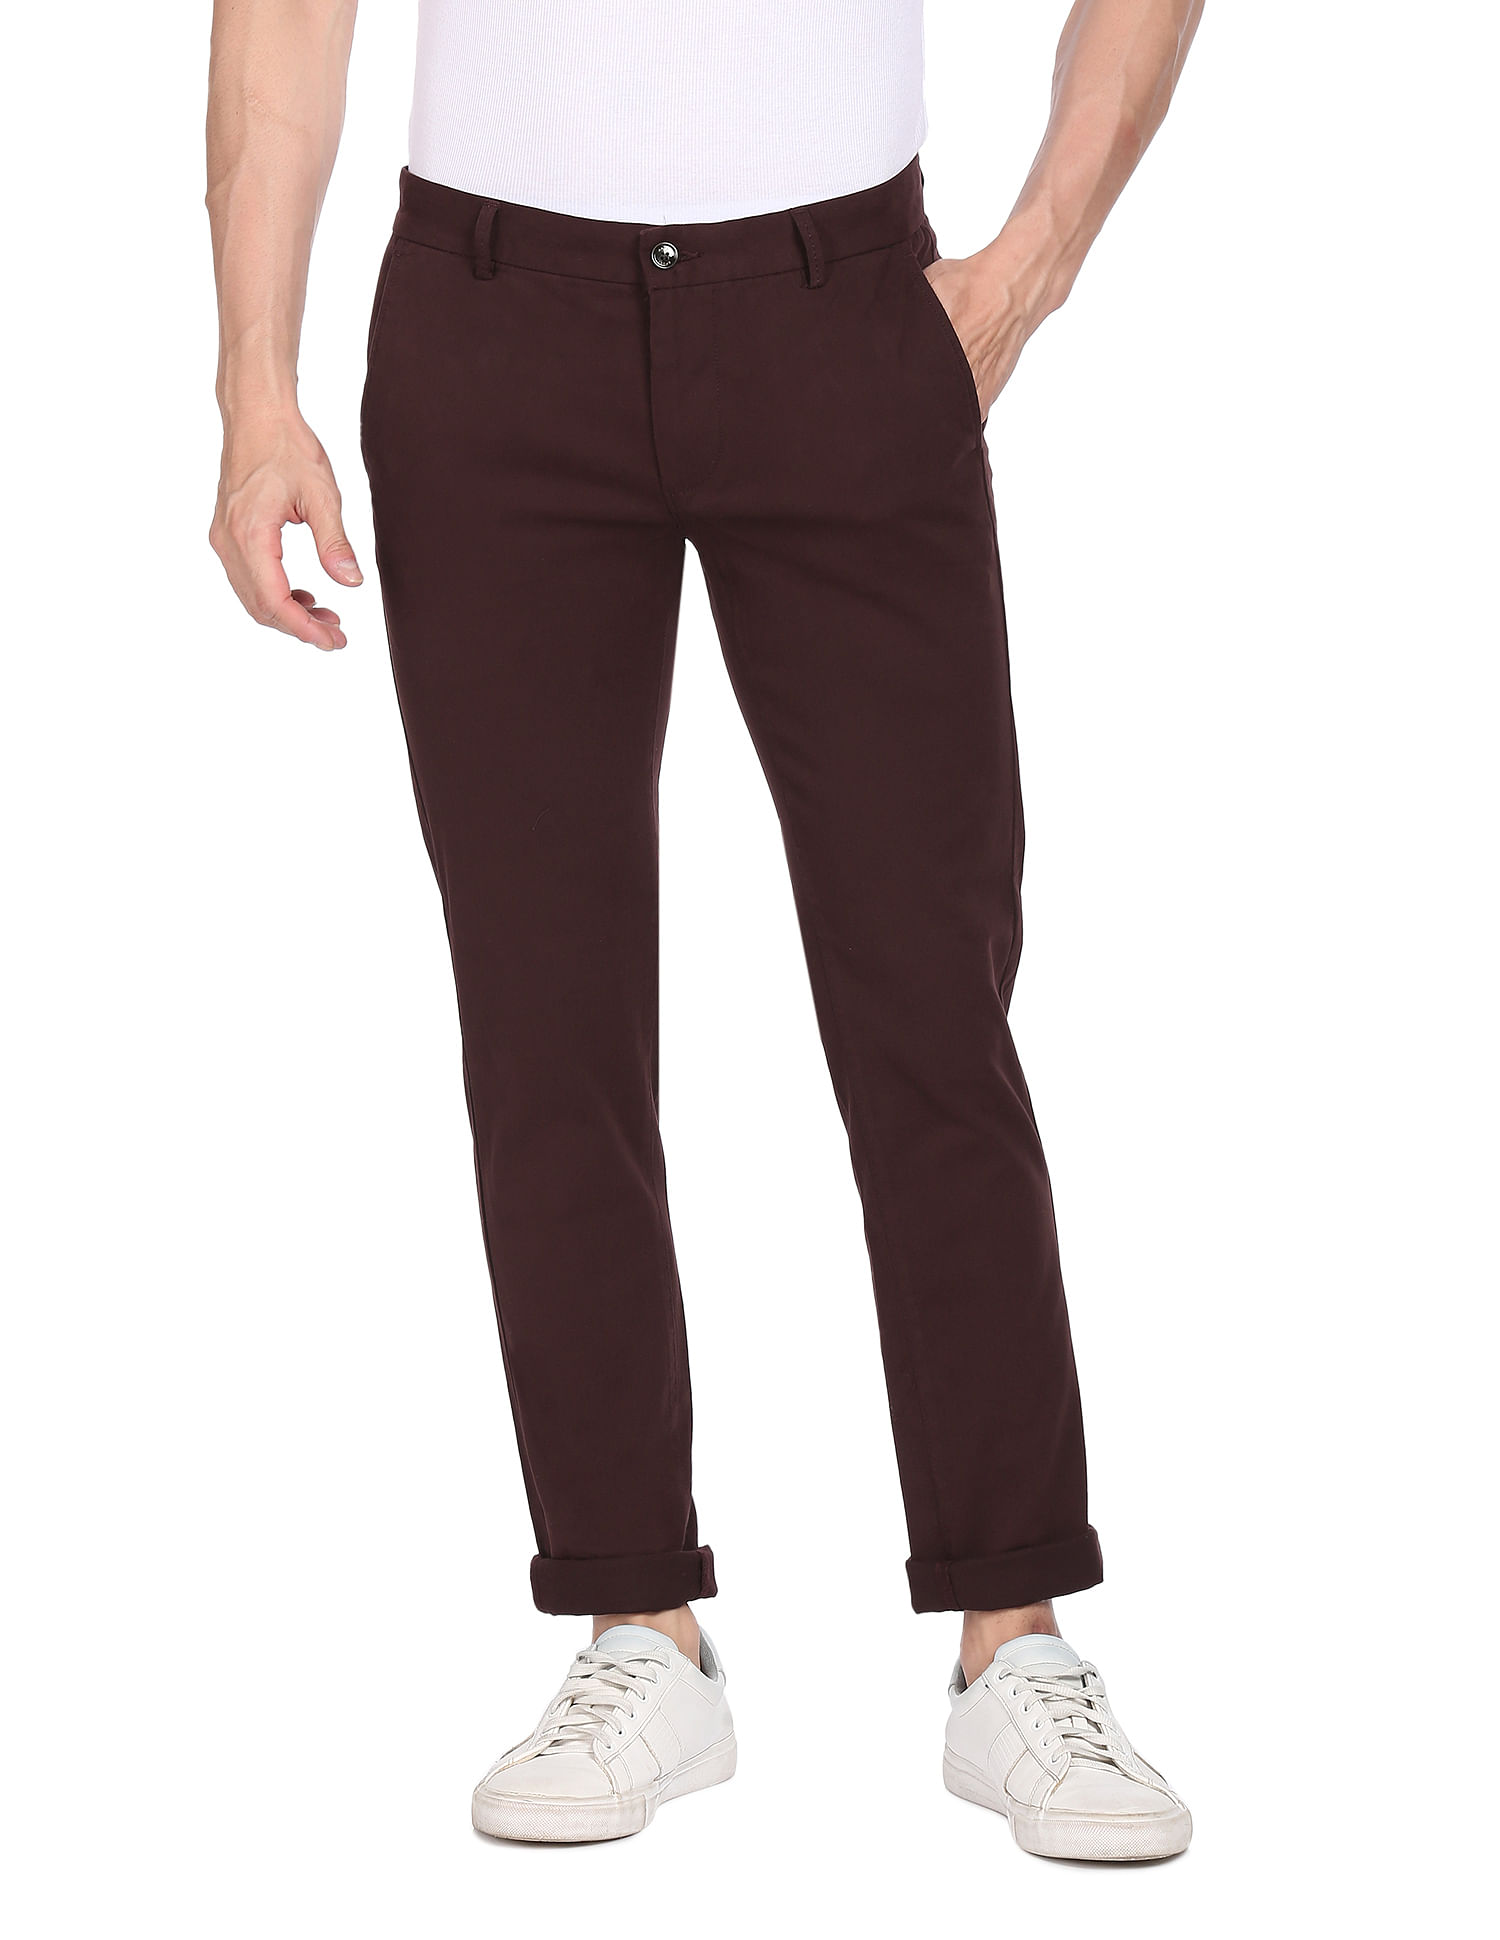 Buy RONGKAI Mens Cargo Pants Cotton Sweatpants Fashion Joggers Sports Long Pants  Trousers, Khaki, Large at Amazon.in